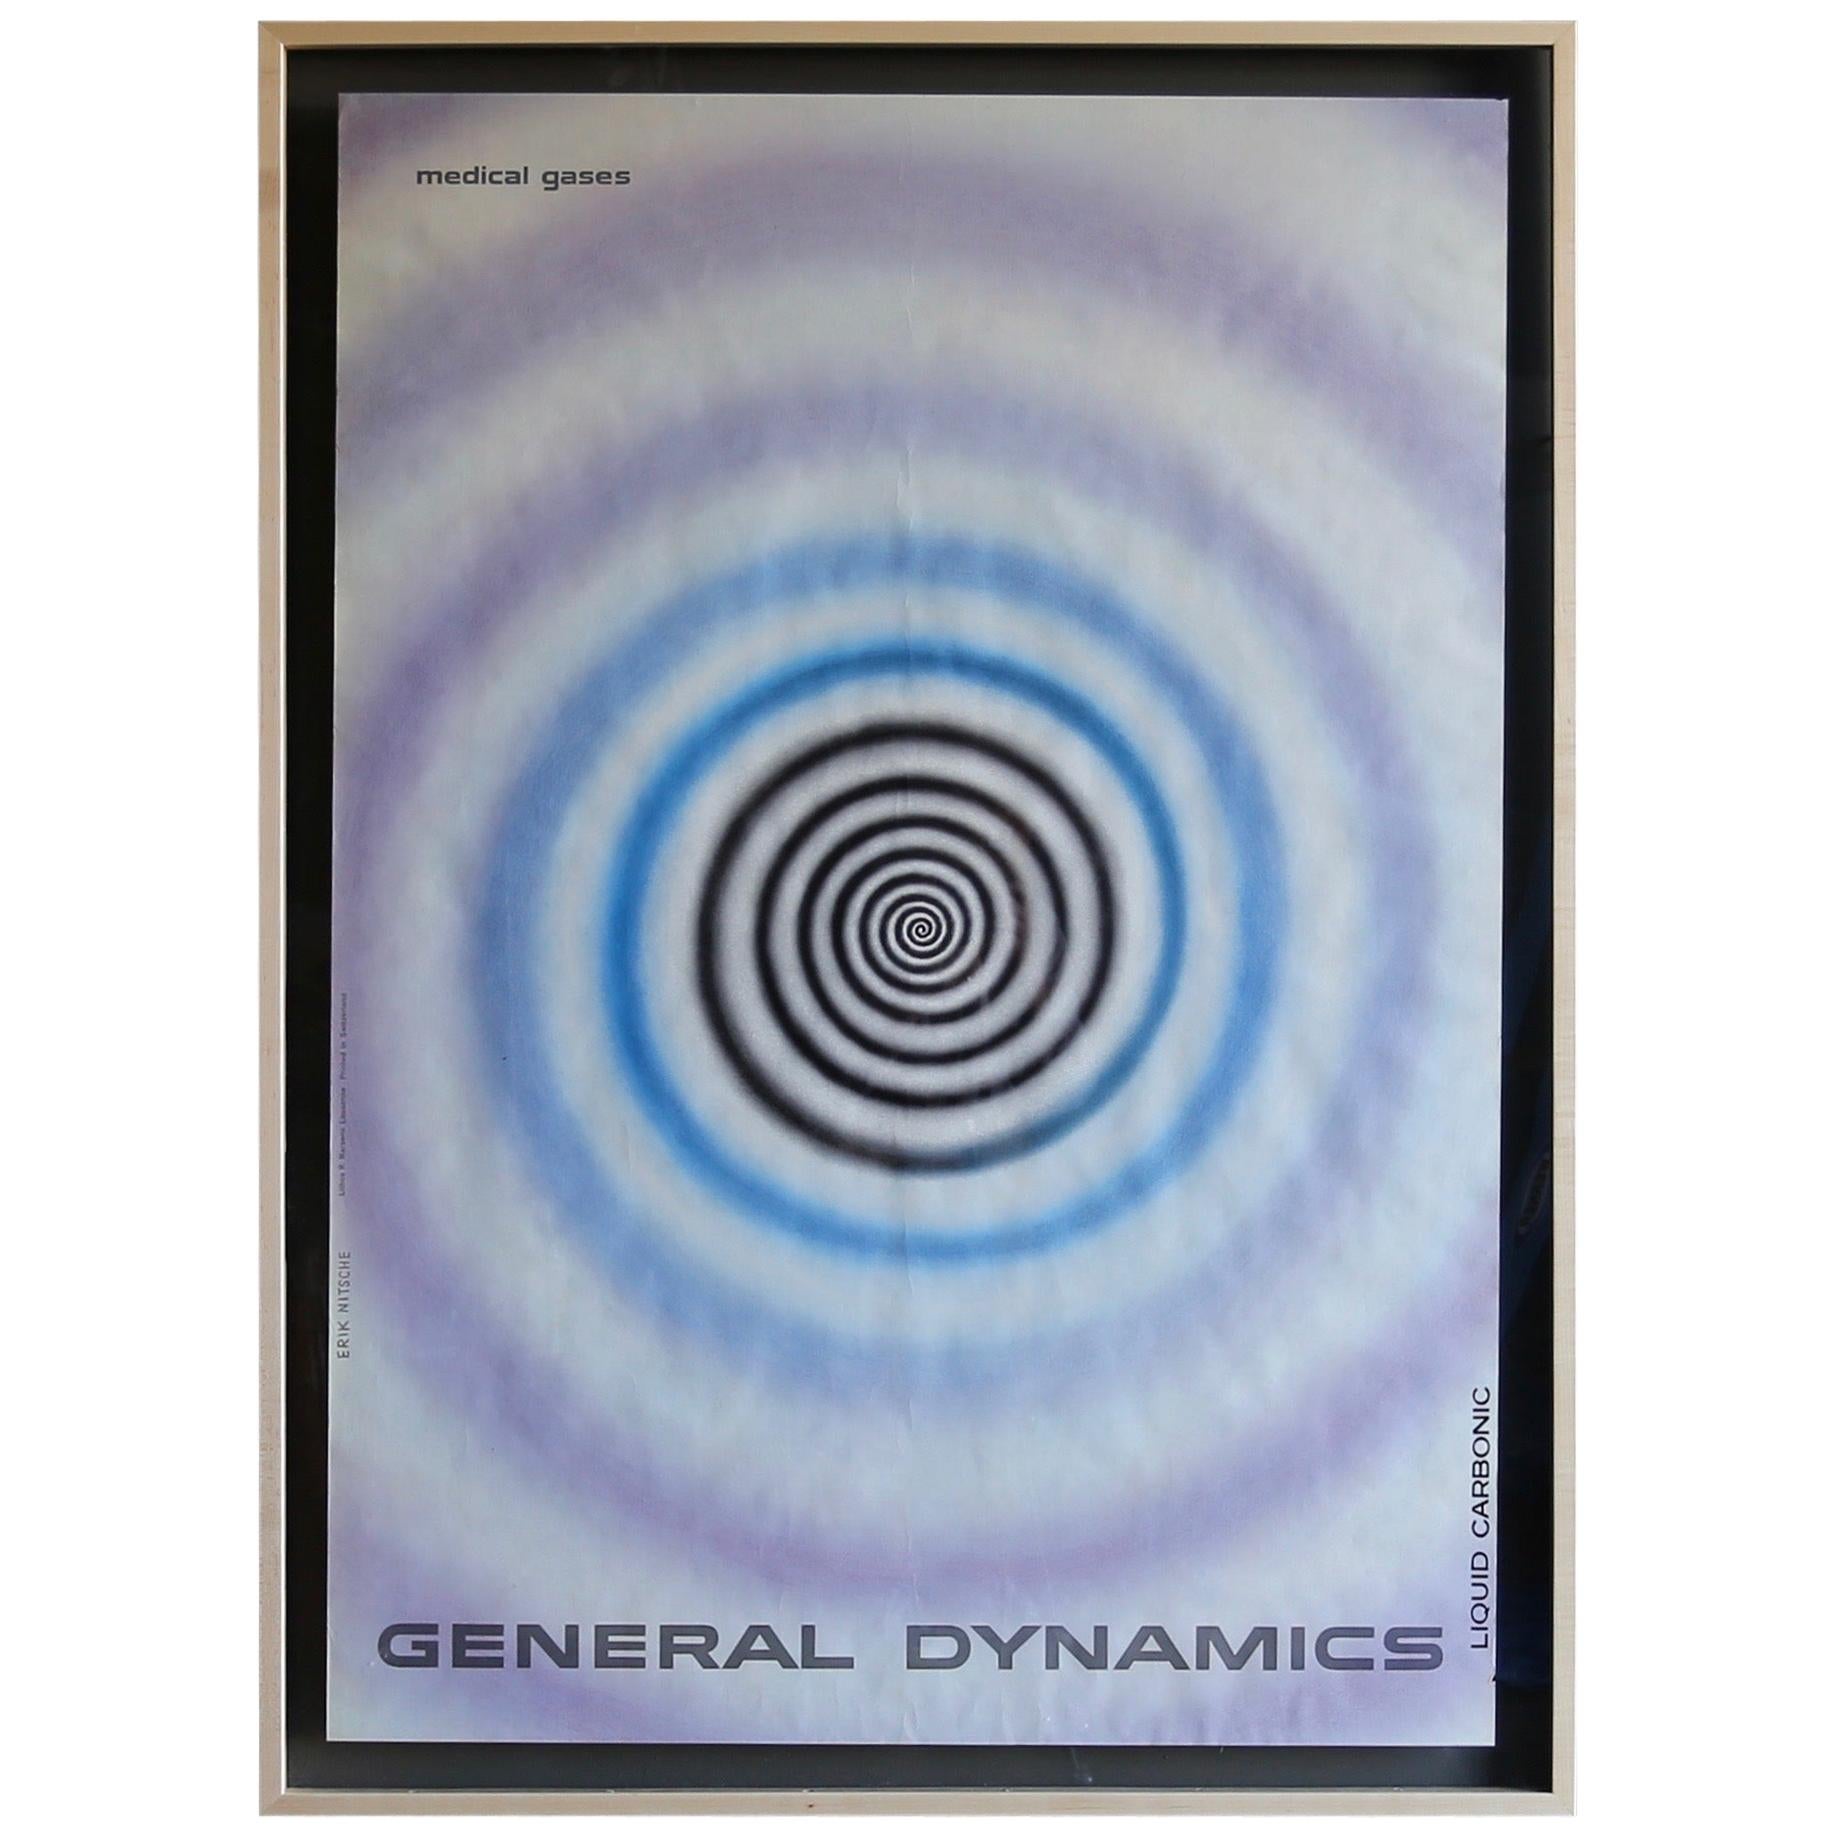 Erik Nitsche "Liquid Carbonic" Poster for General Dynamics, circa 1960